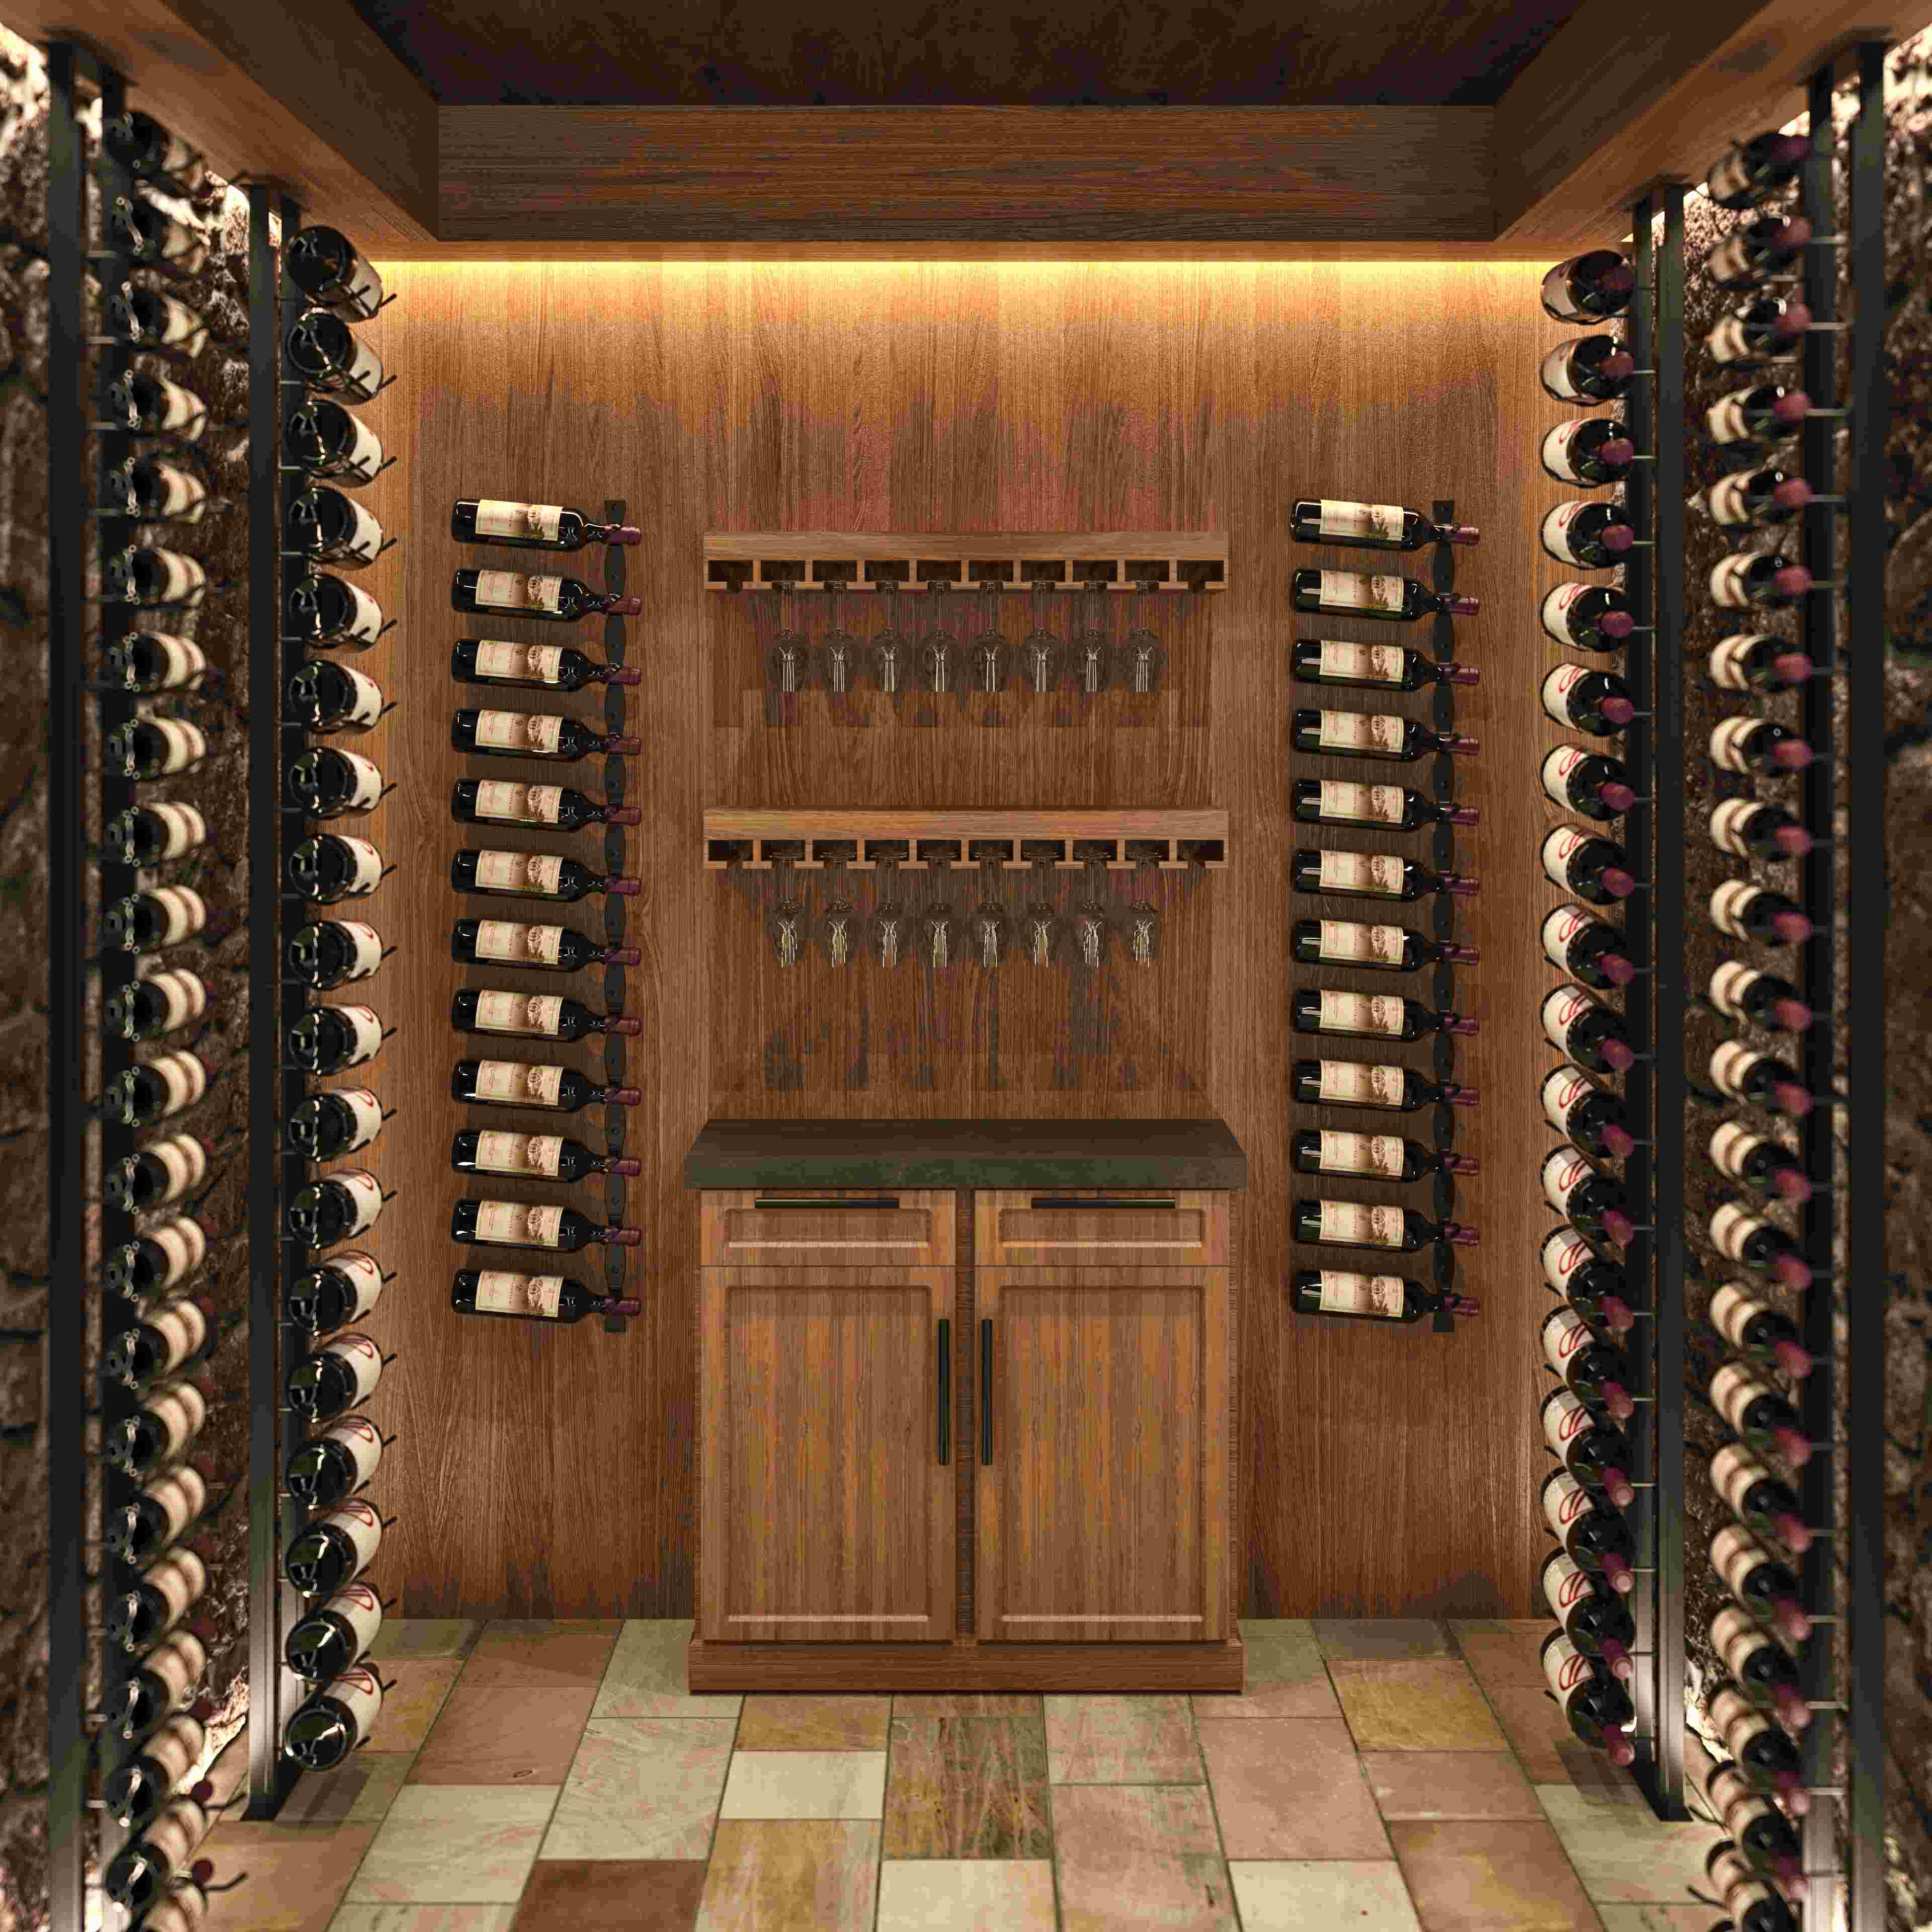 Freestanding wine frame in a cellar